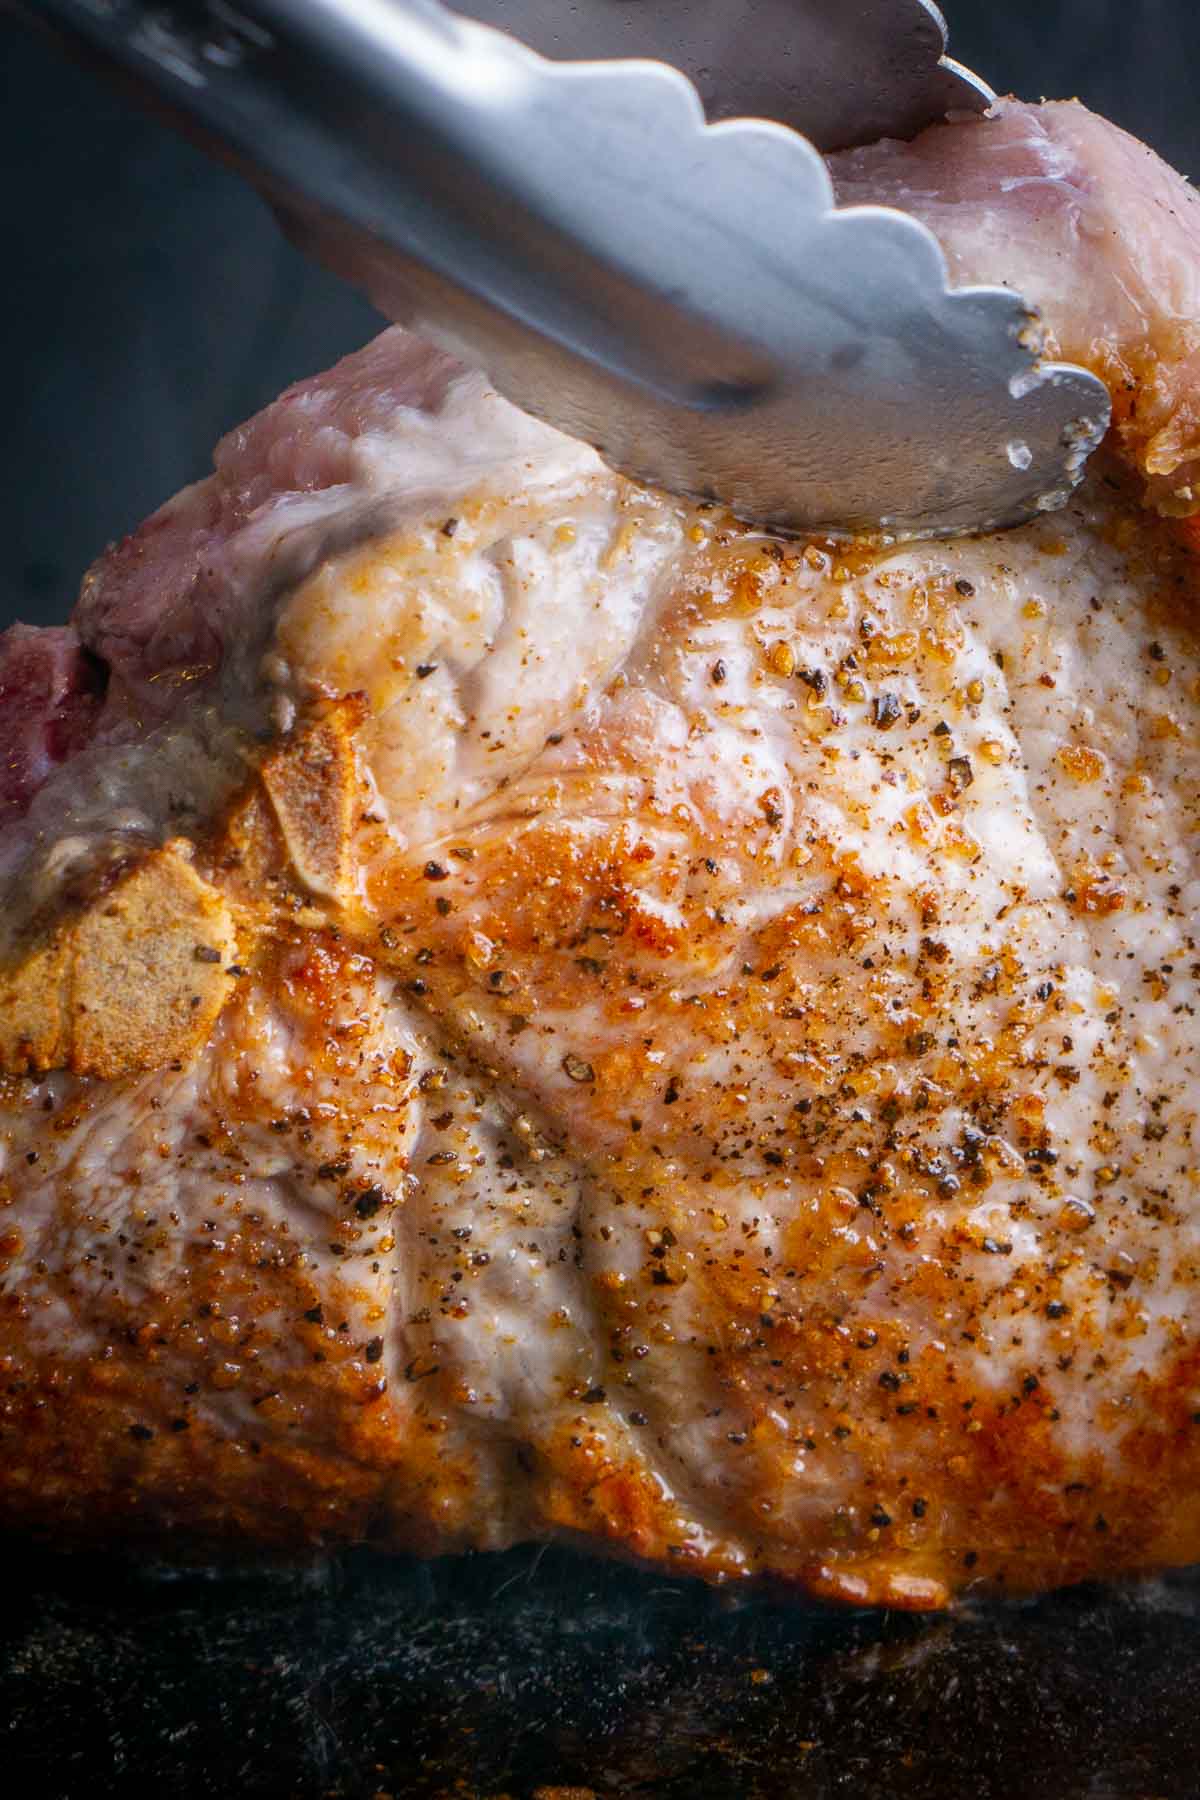 tongs lift seared pork chop